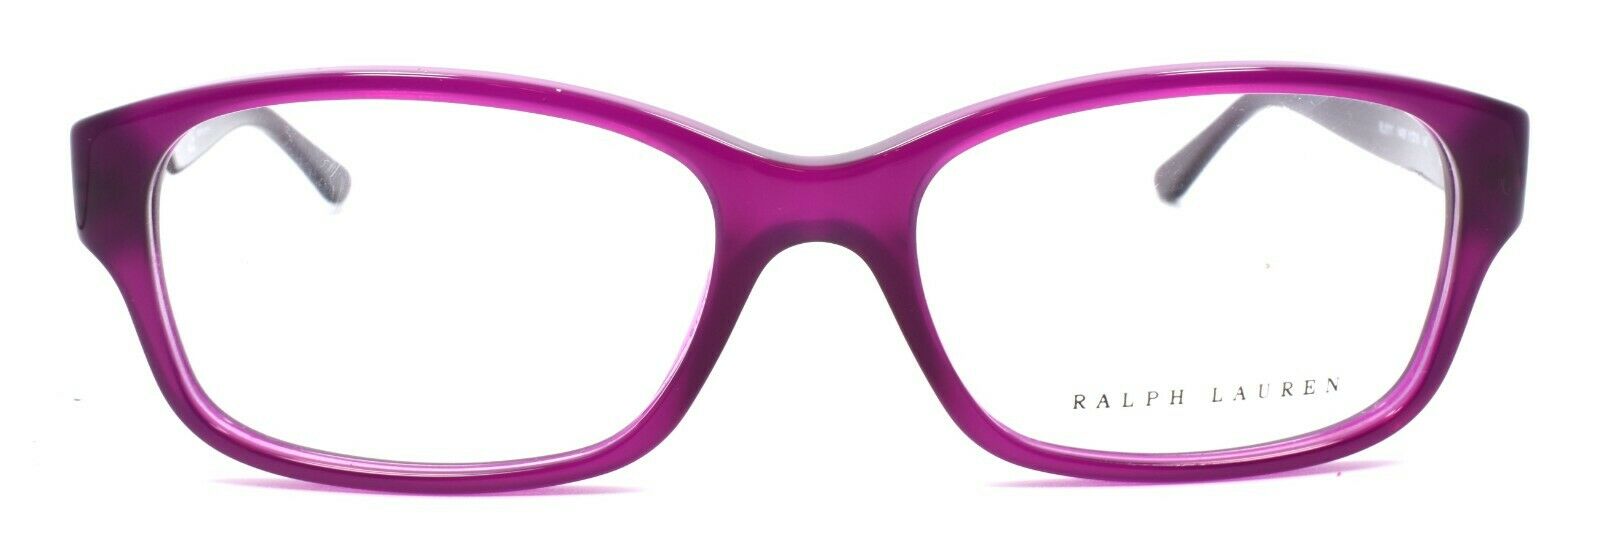 2-Ralph Lauren RL6111 5408 Women's Eyeglasses Frames 51-16-140 Purple-8053672150179-IKSpecs